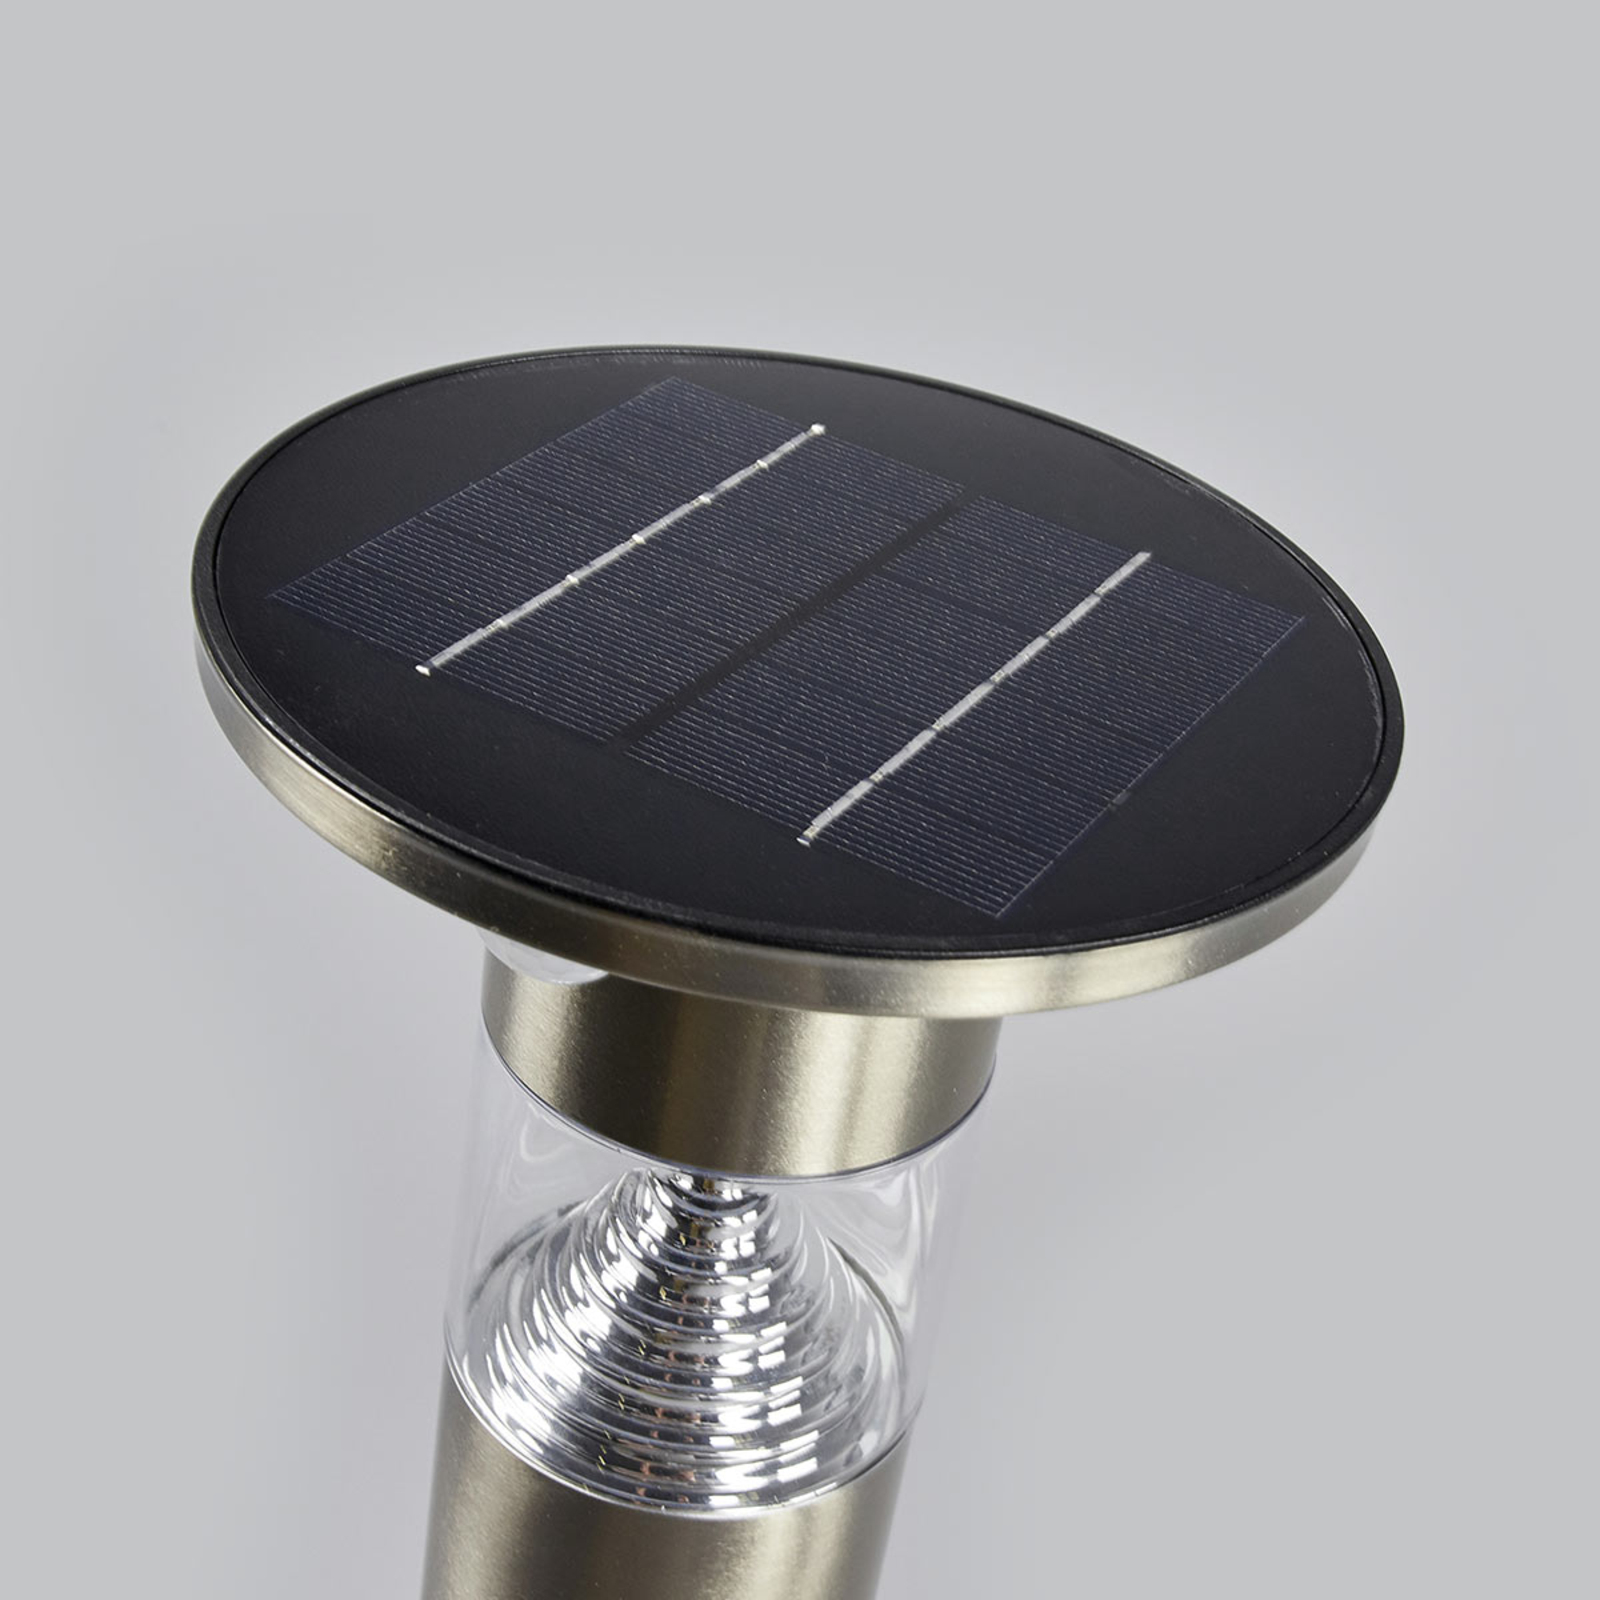 Farola LED Jalisa, tecnología solar y sensor